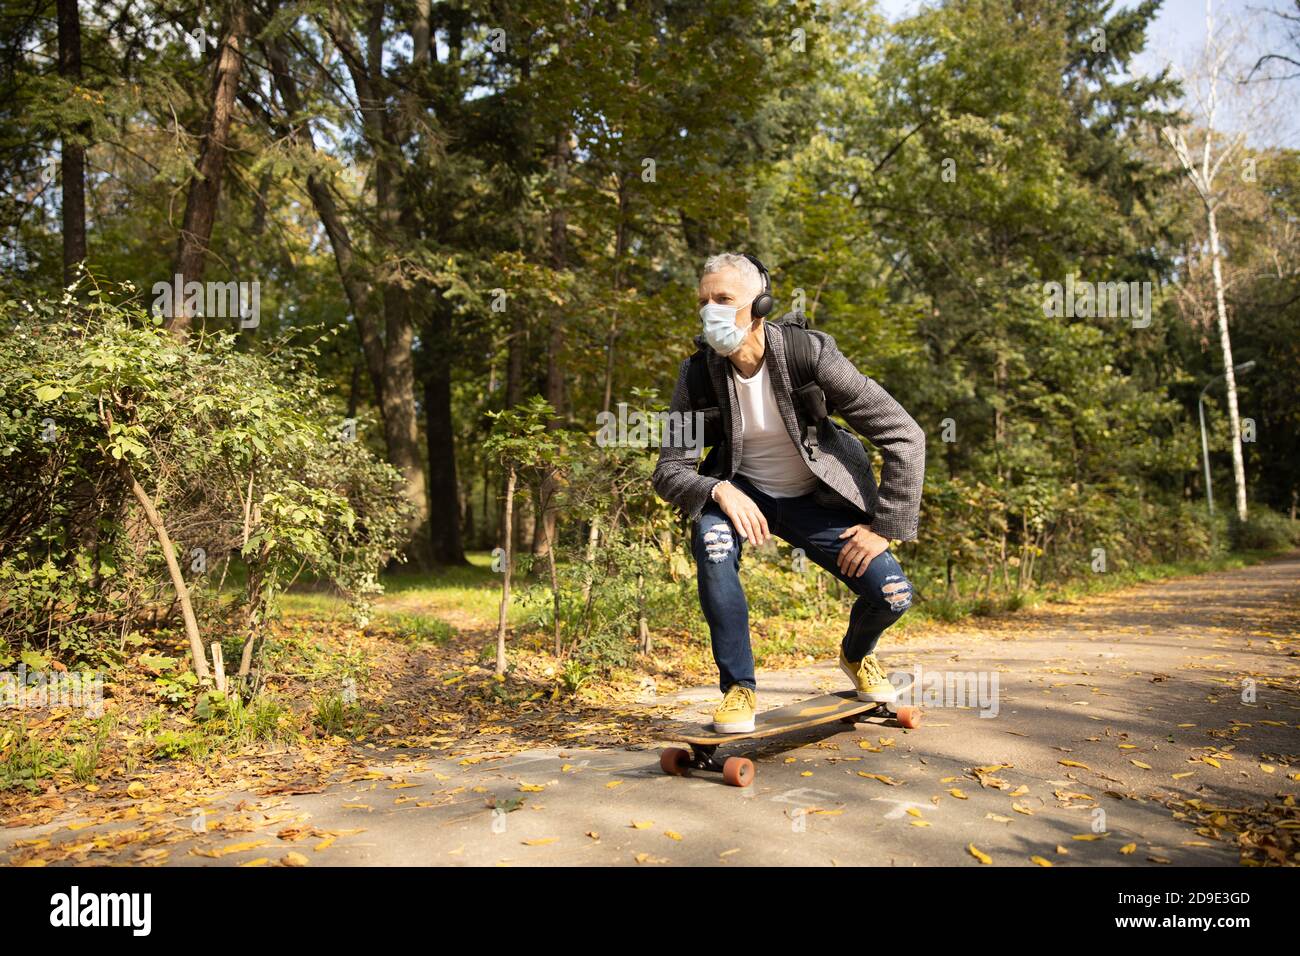 Athletic man in mask going skateboarding in park Stock Photo